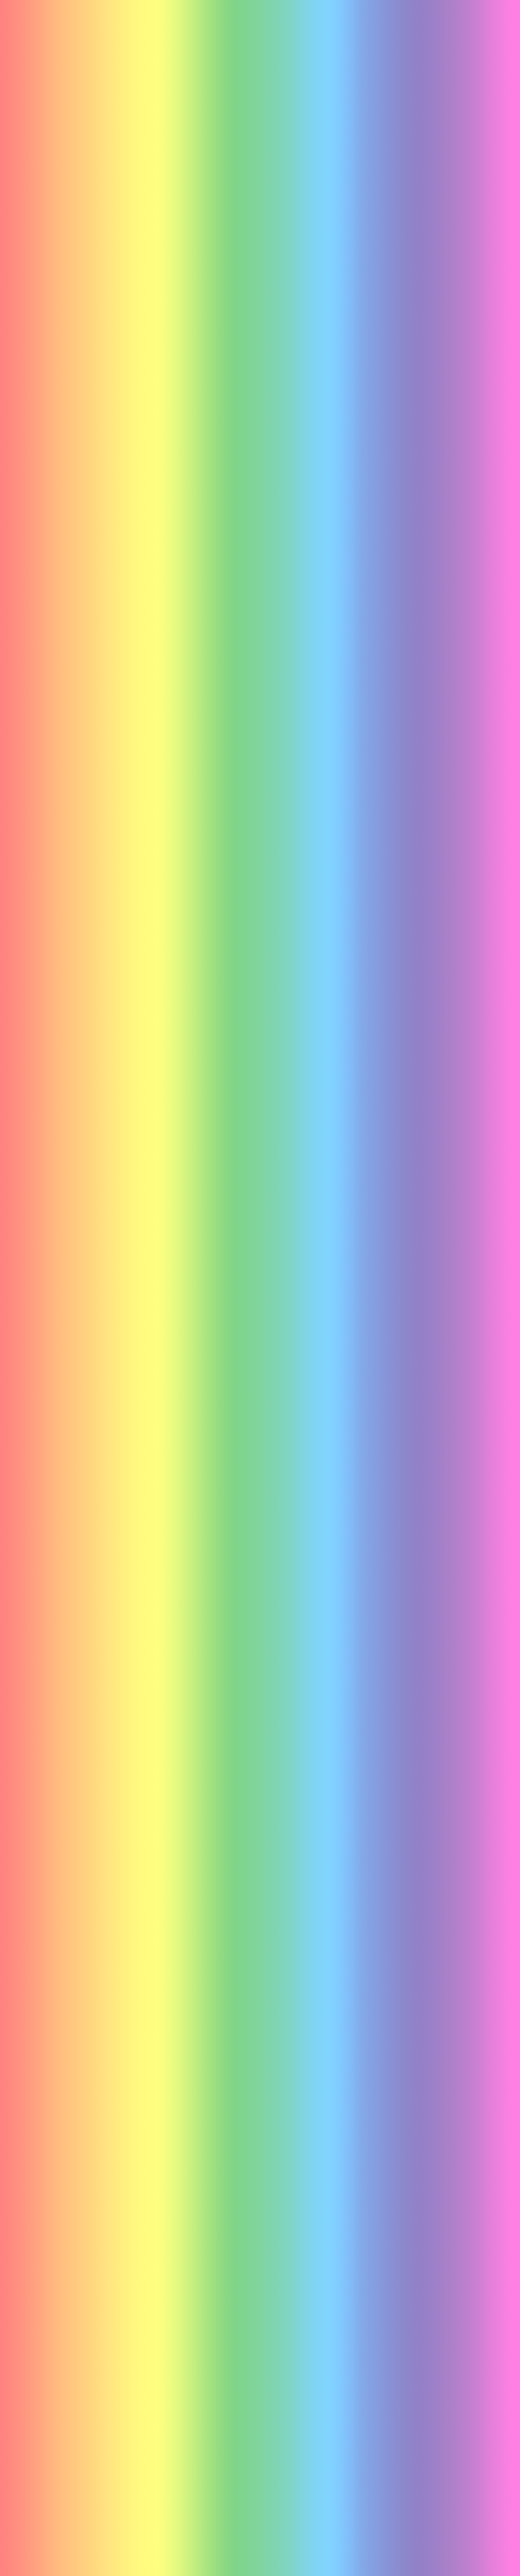 Pastel Rainbow Gradient Background By Rainbowpanda101